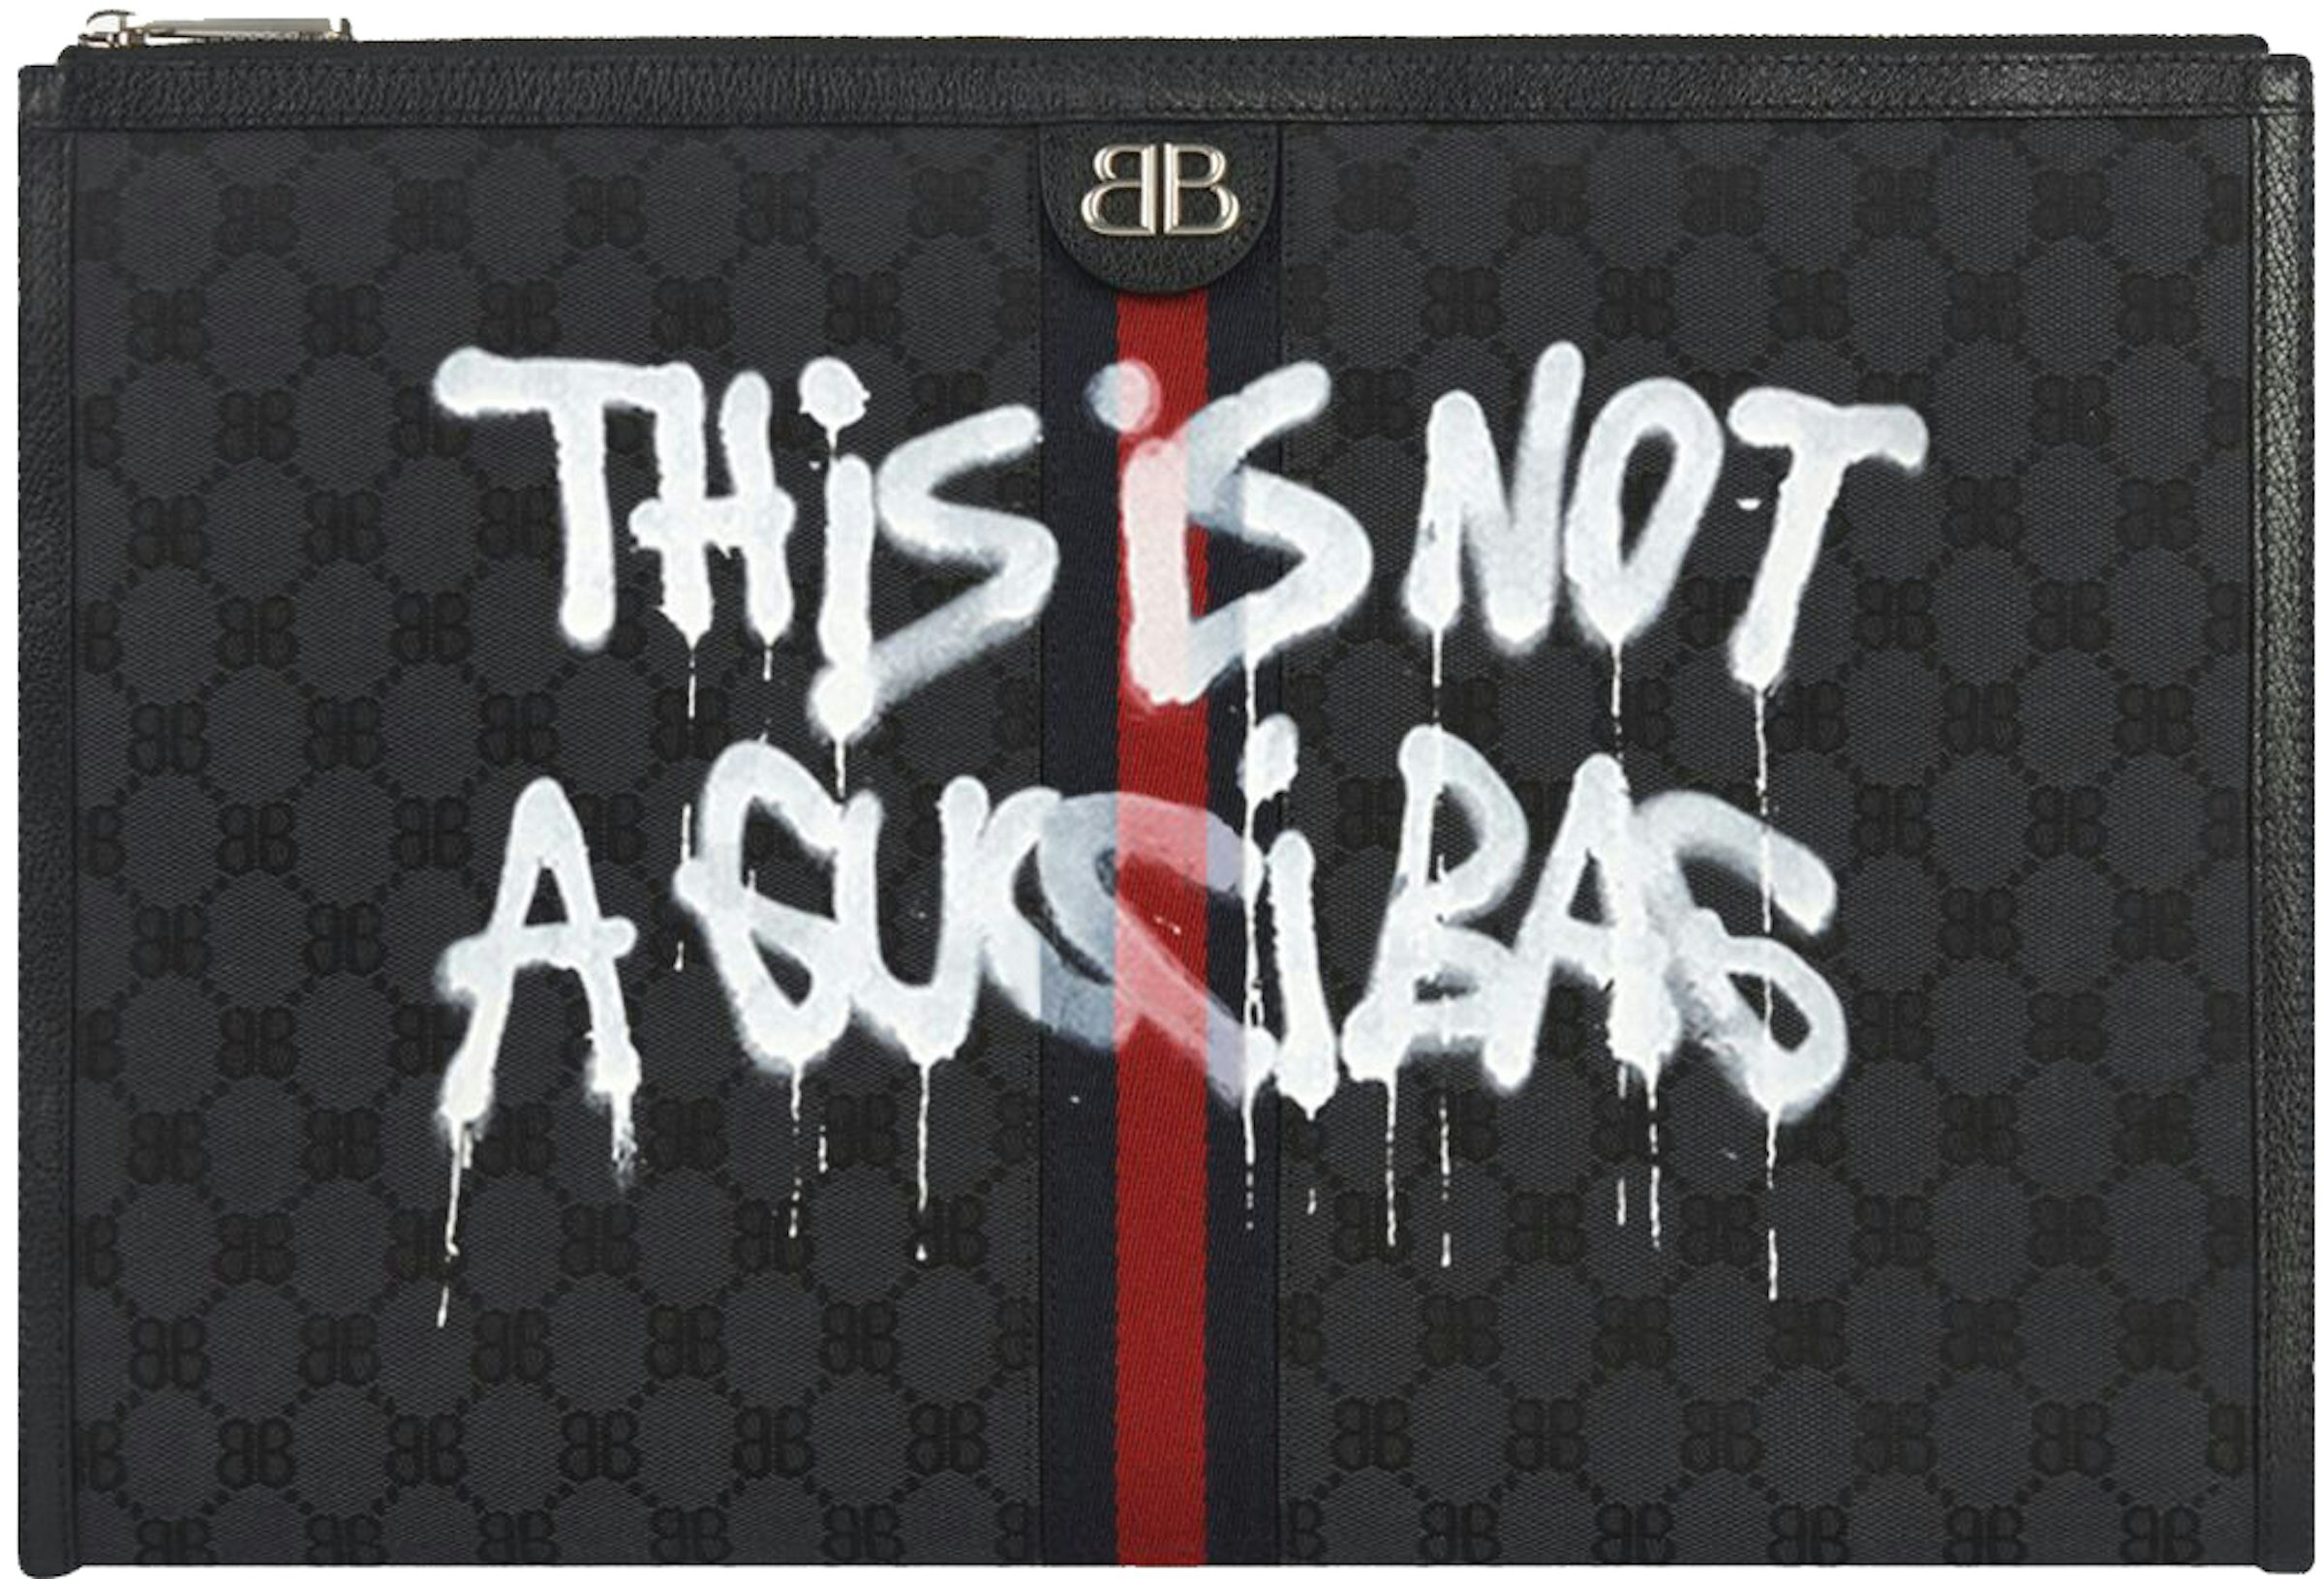 Balenciaga Gucci Hacker Project Graffiti Duffle Bag - 100% Authentic - Beige